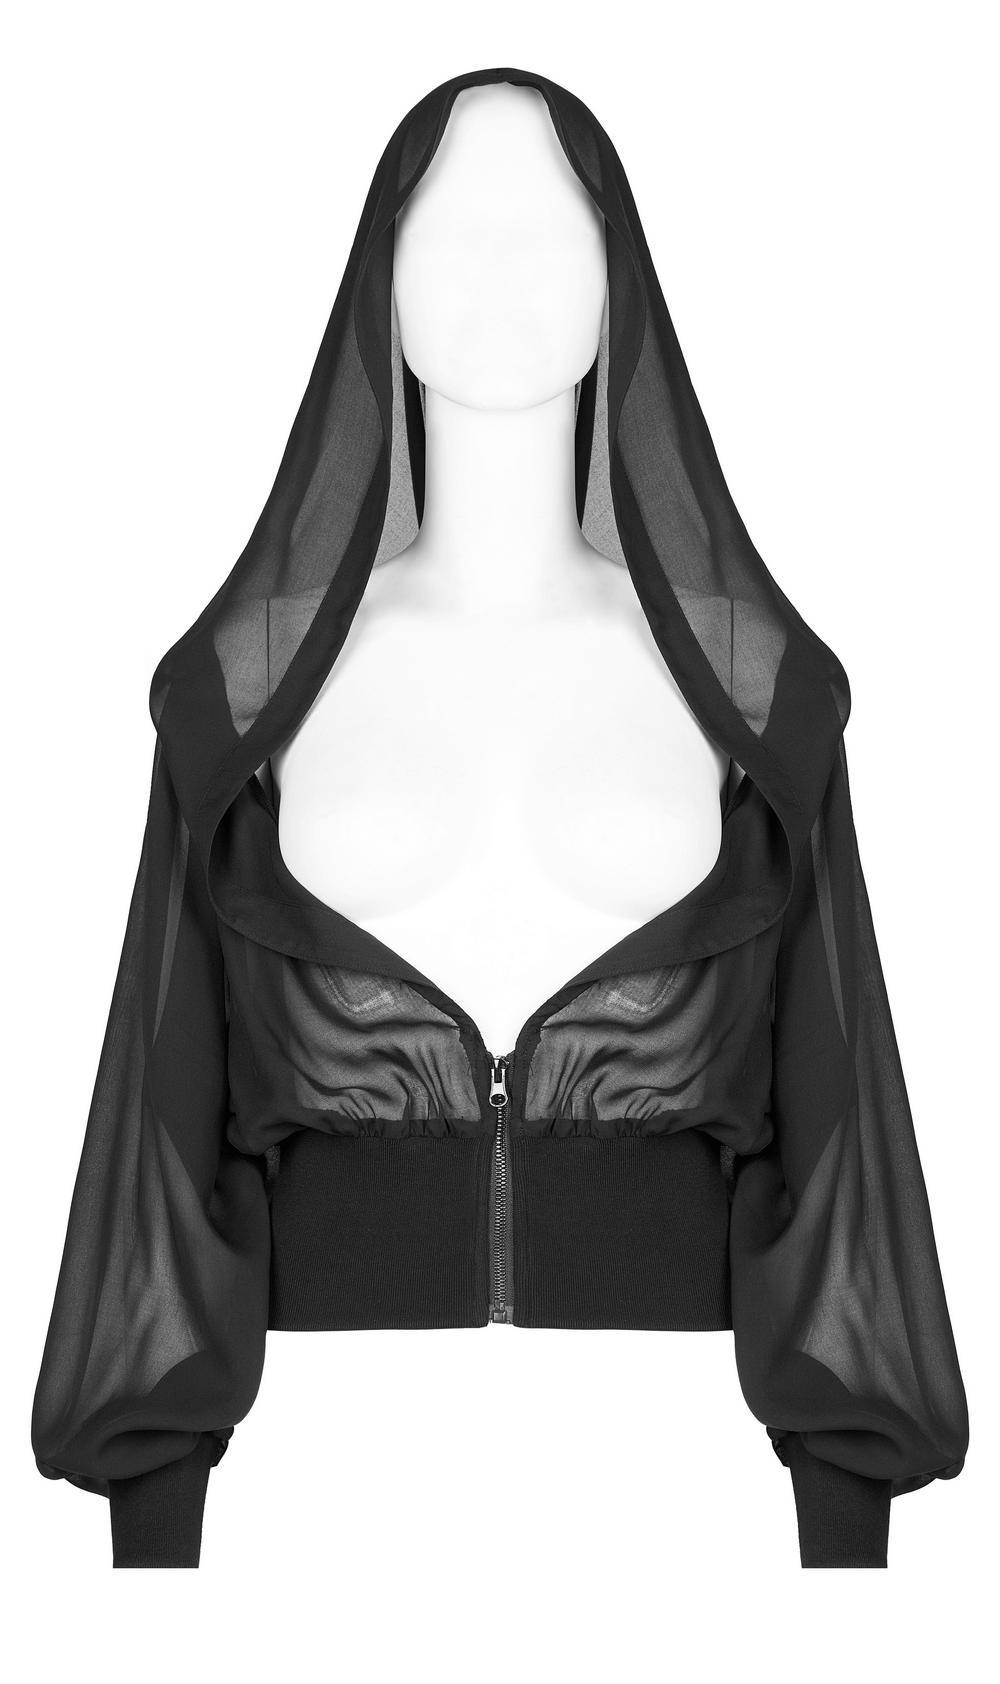 Stylish Chic Black Sheer Sleeve Hooded Crop Top